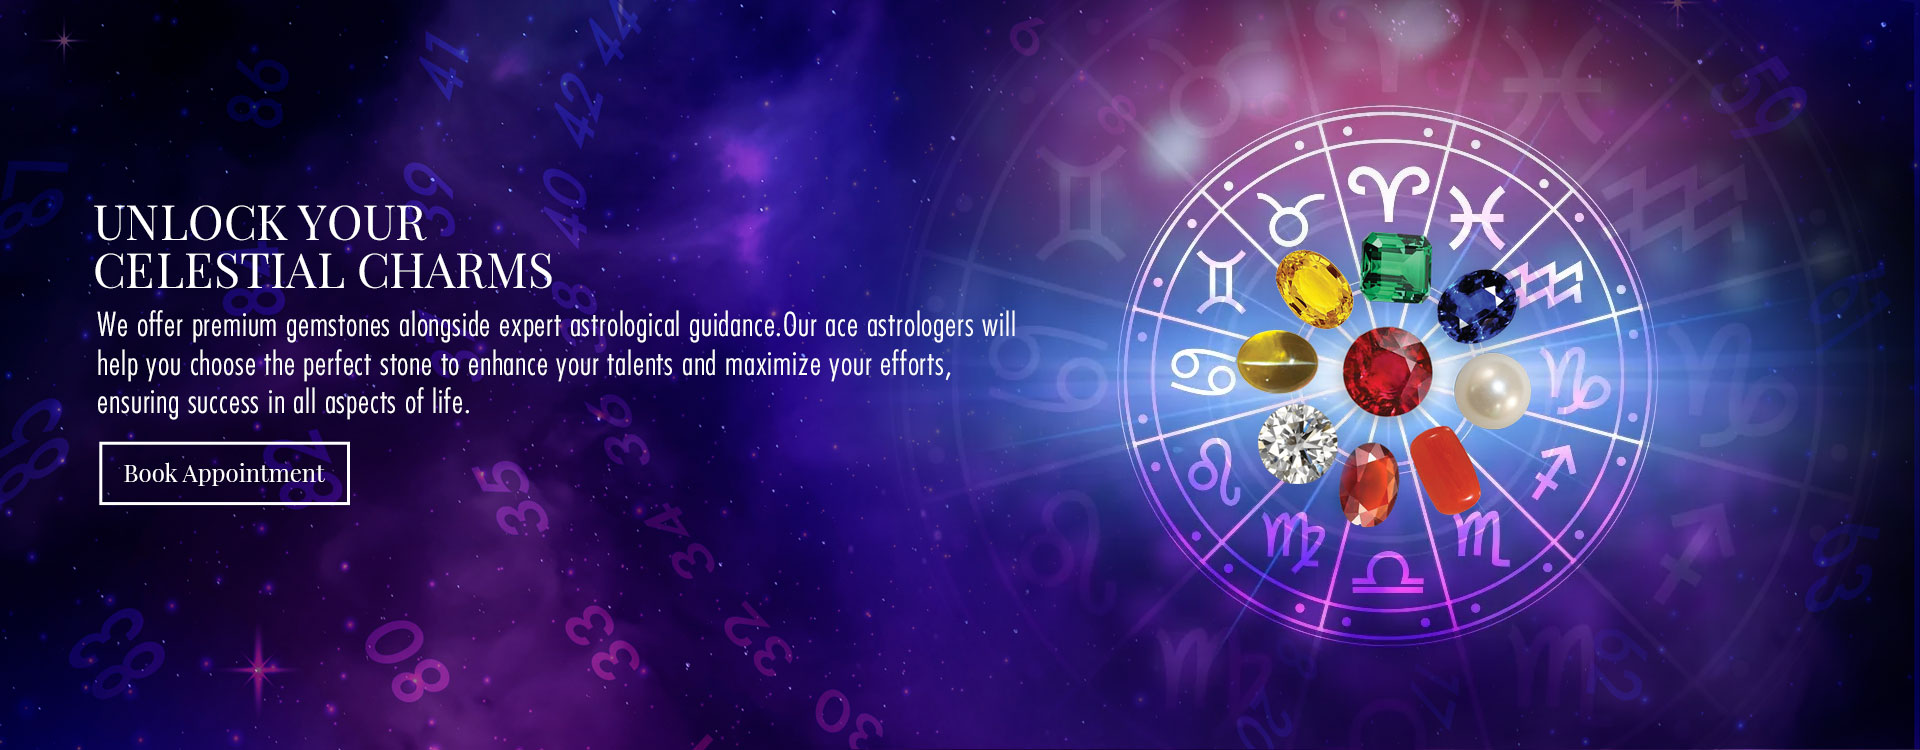 osha jewels astrology